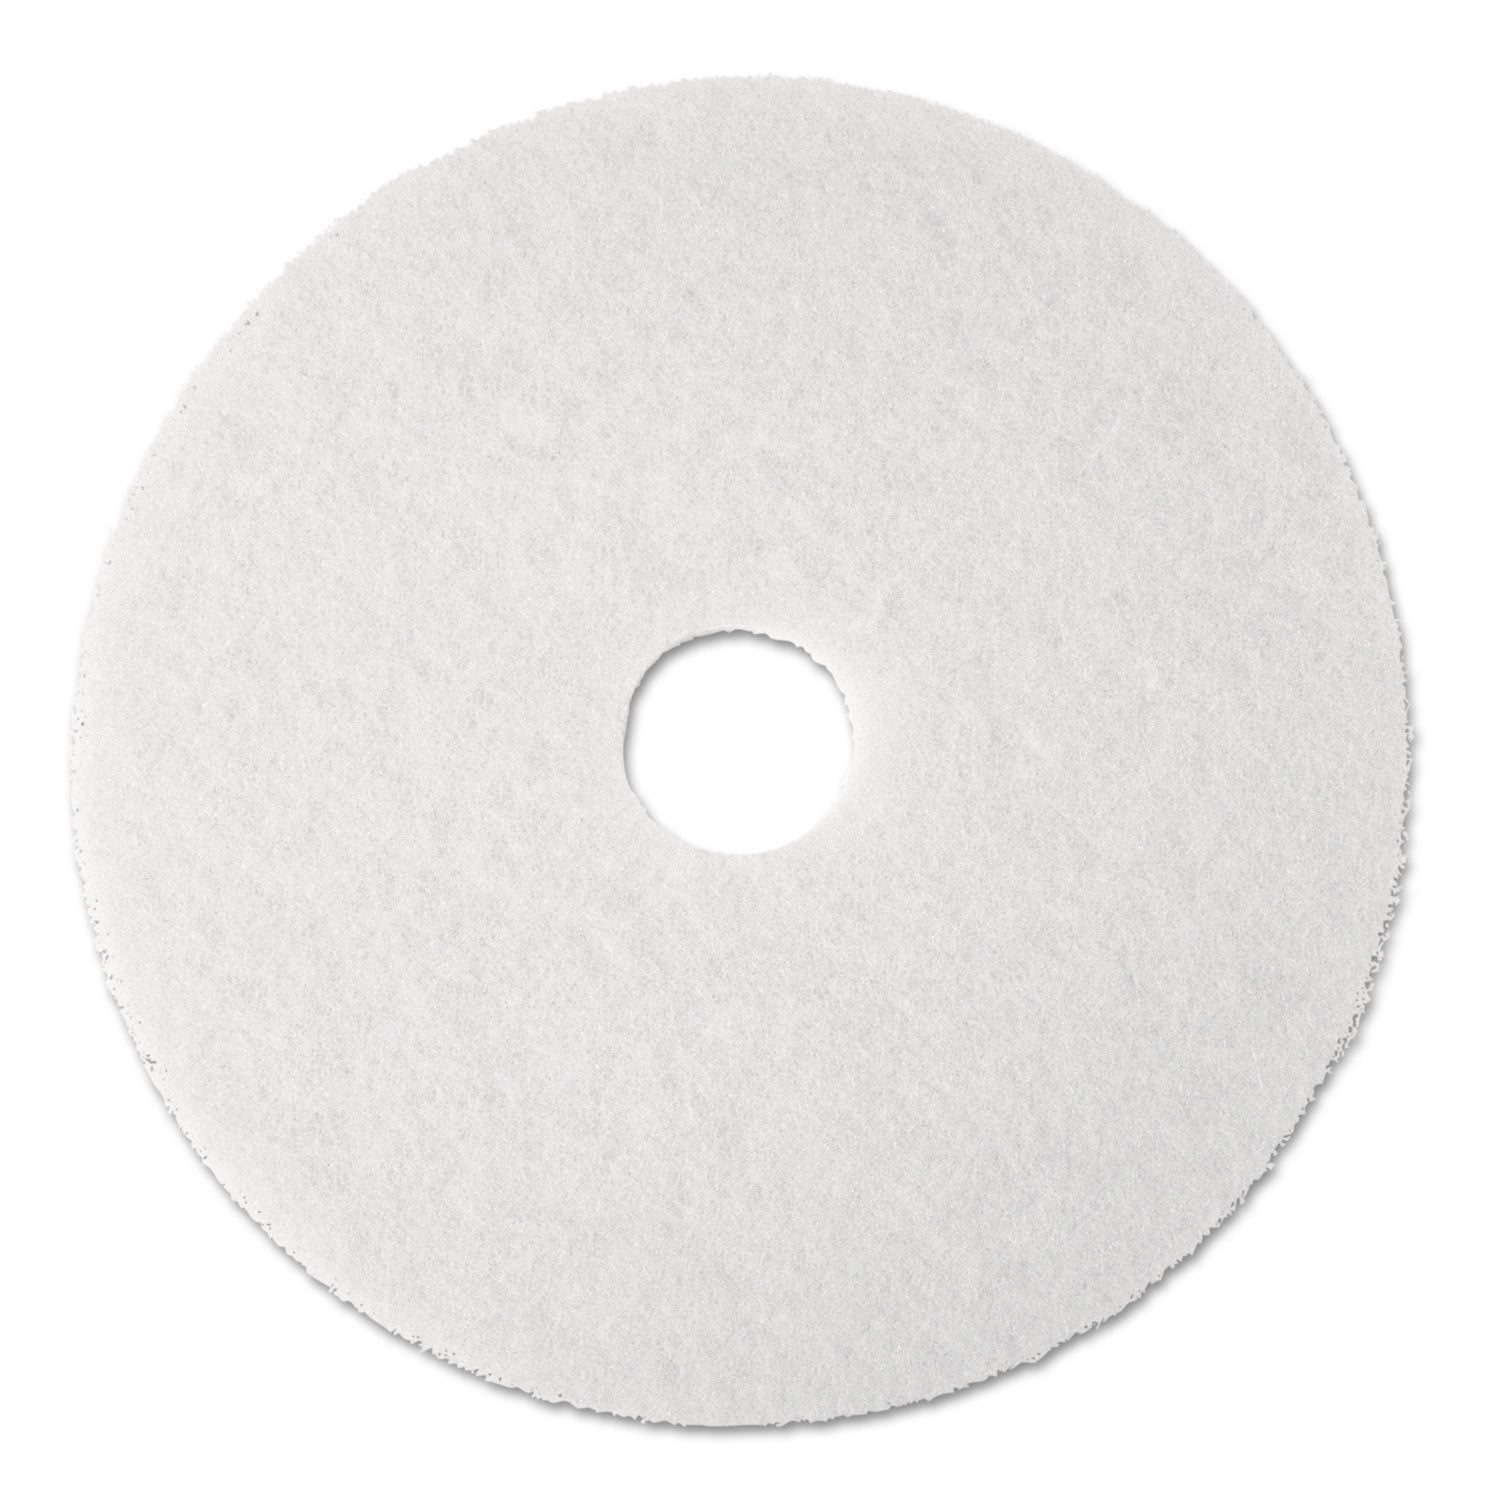 Low-Speed Super Polishing Floor Pads 4100, 13" Diameter, White, 5/Carton - 